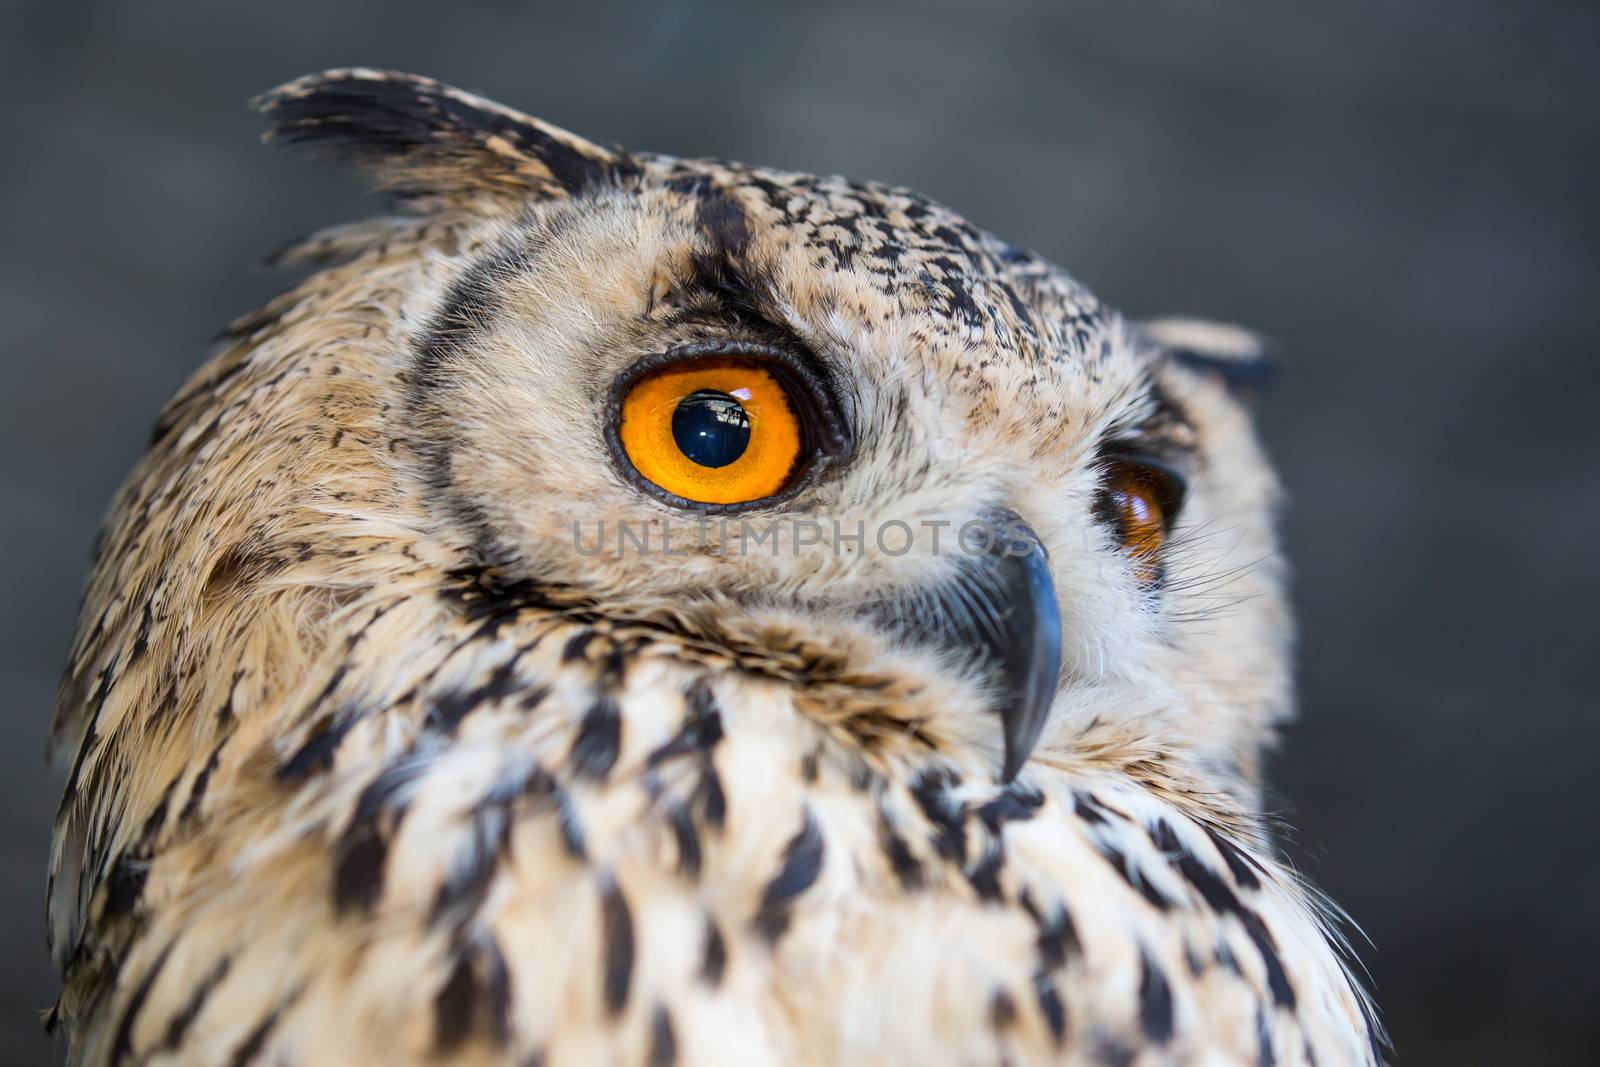 Portrait of a Korean Eagle Owl with a large orange round eye